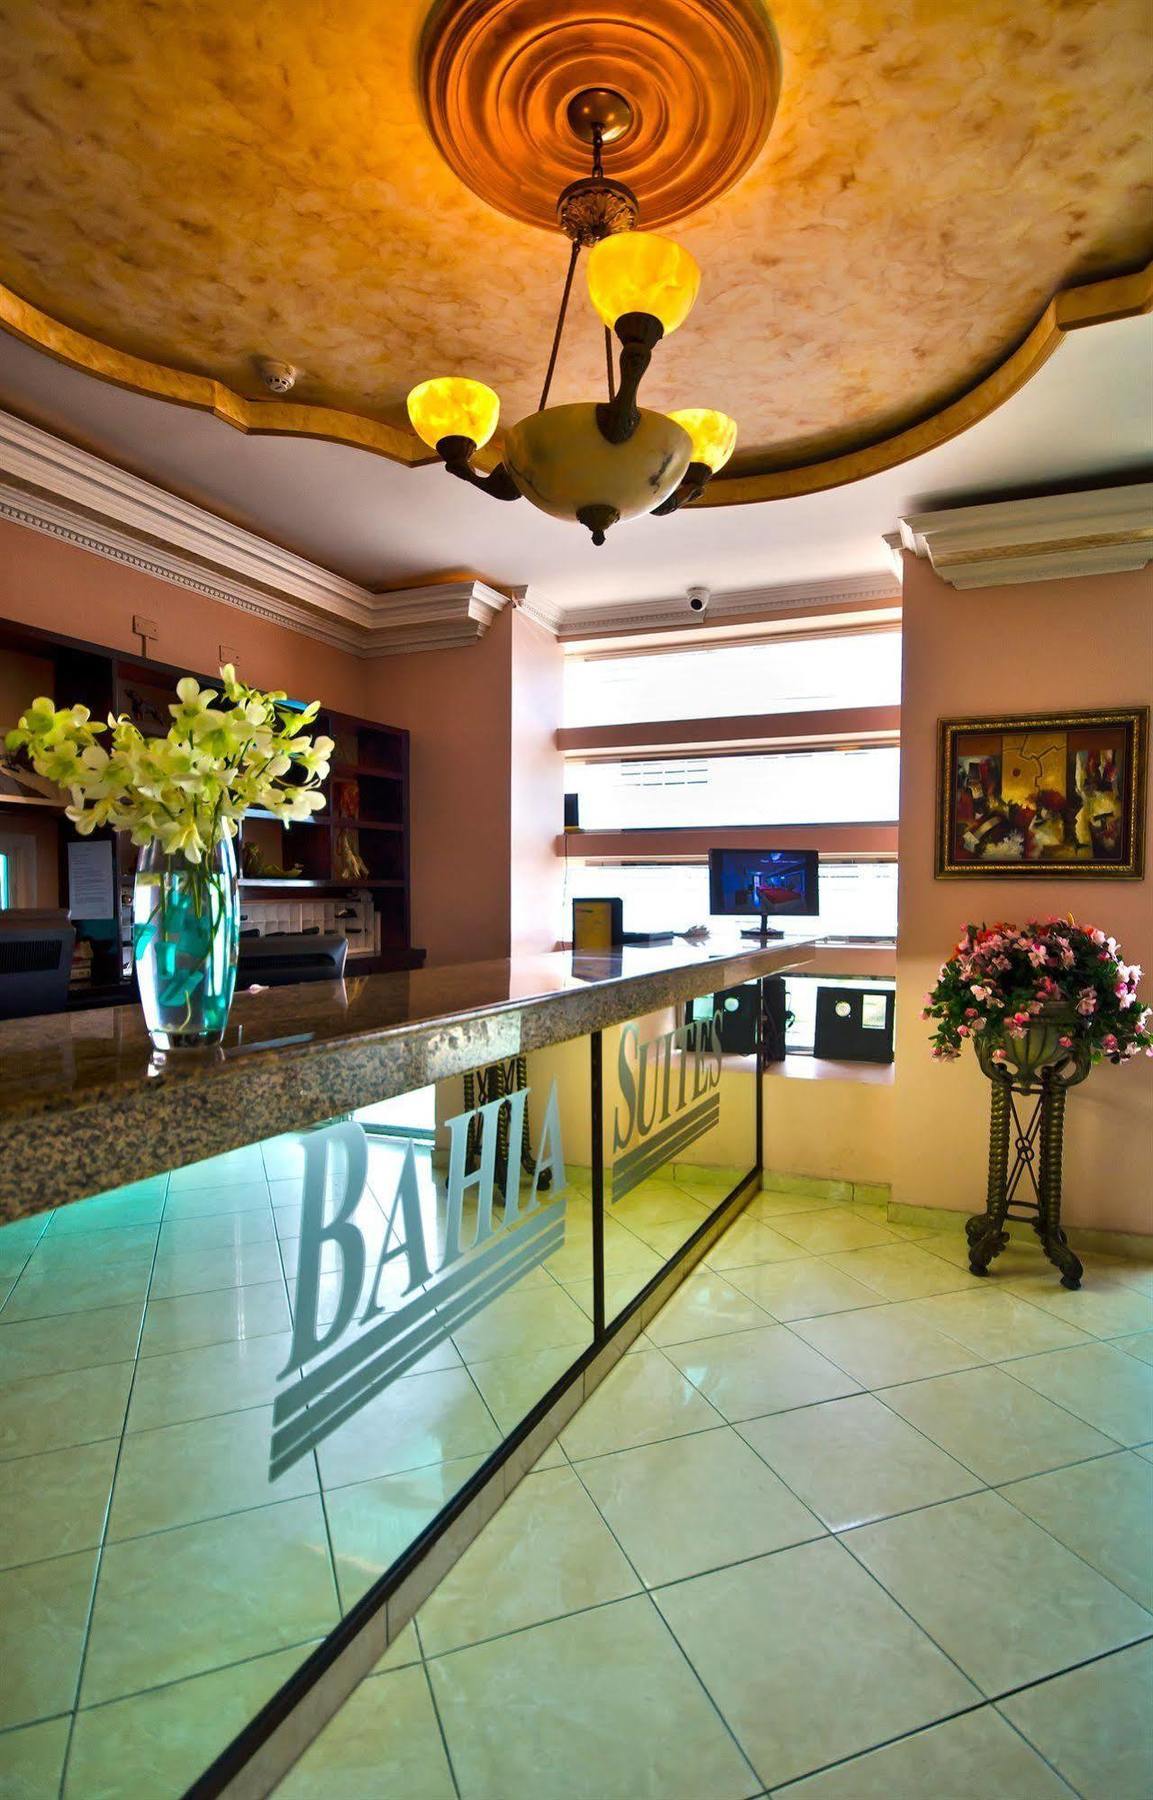 Hotel Bahia Suites Panama City Exterior photo